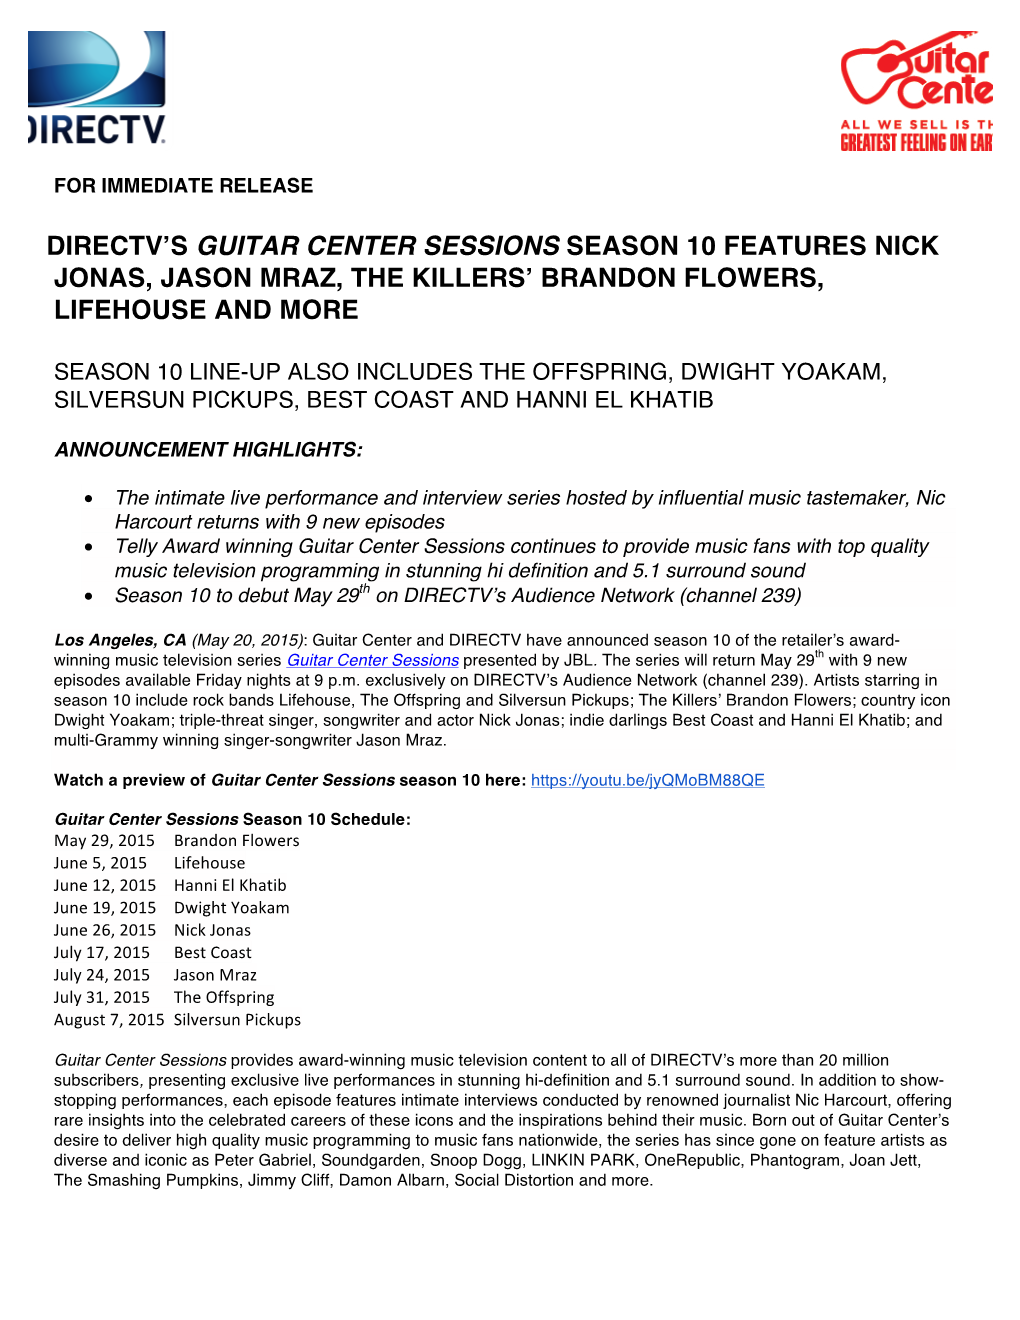 Directv's Guitar Center Sessions Season 10 Features Nick Jonas, Jason Mraz